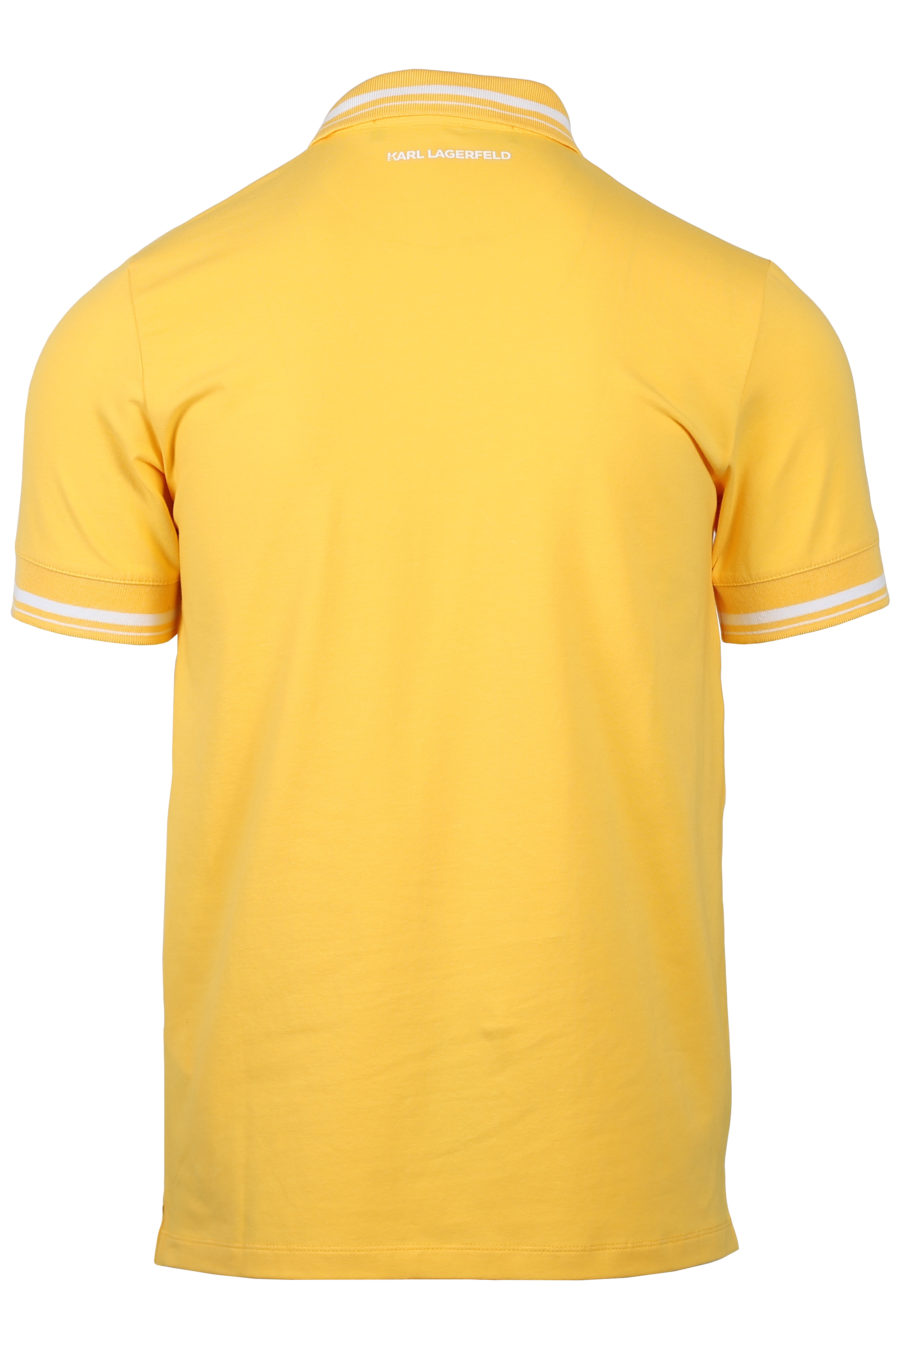 Poloshirt gelbes Logo weiß - IMG 2031